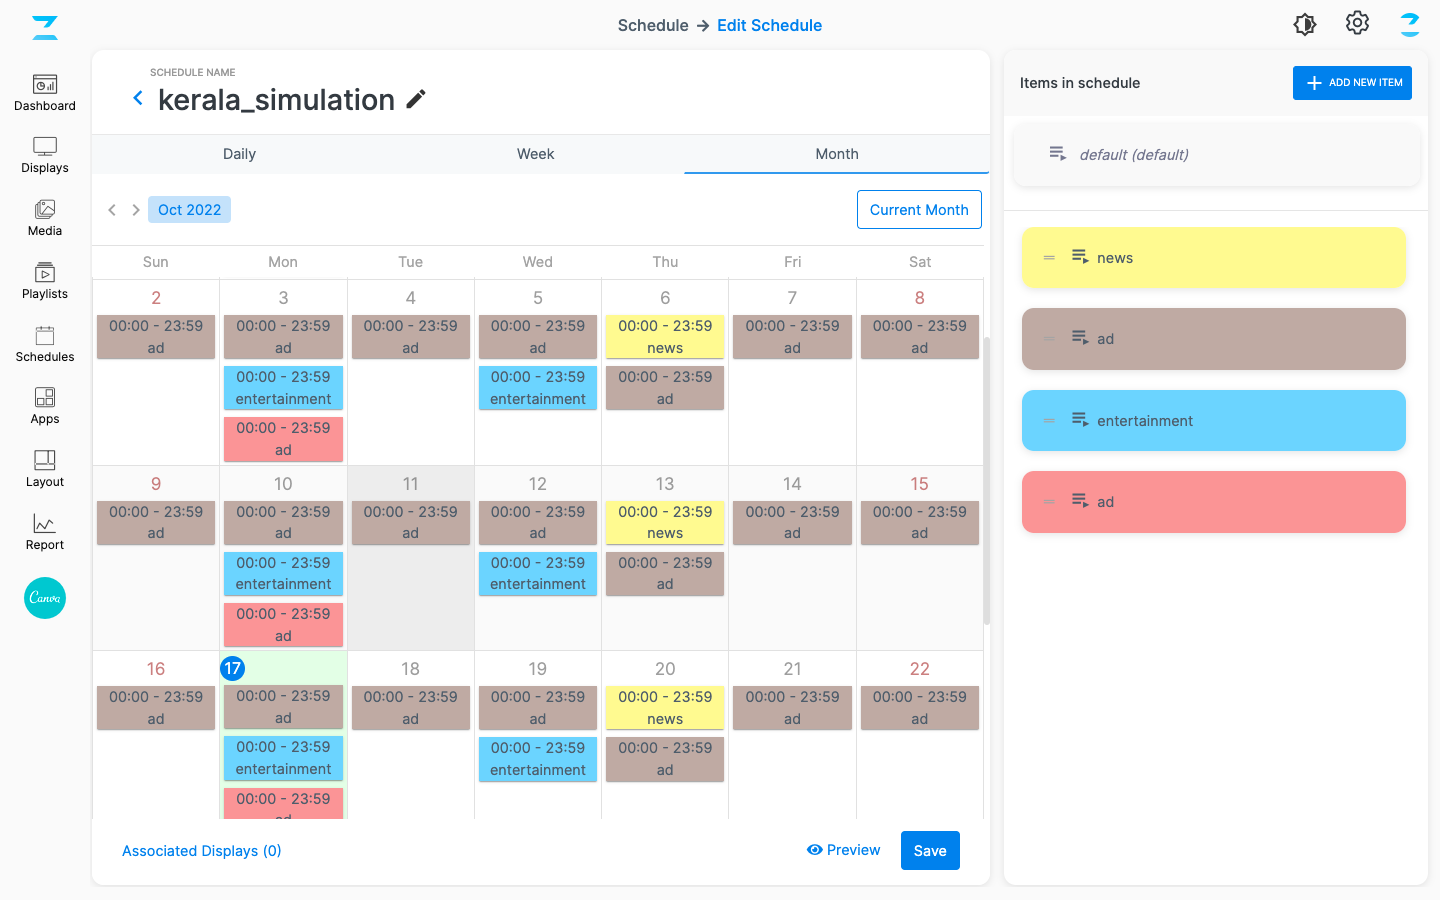 Zeetaminds Software - Calendar based Scheduling